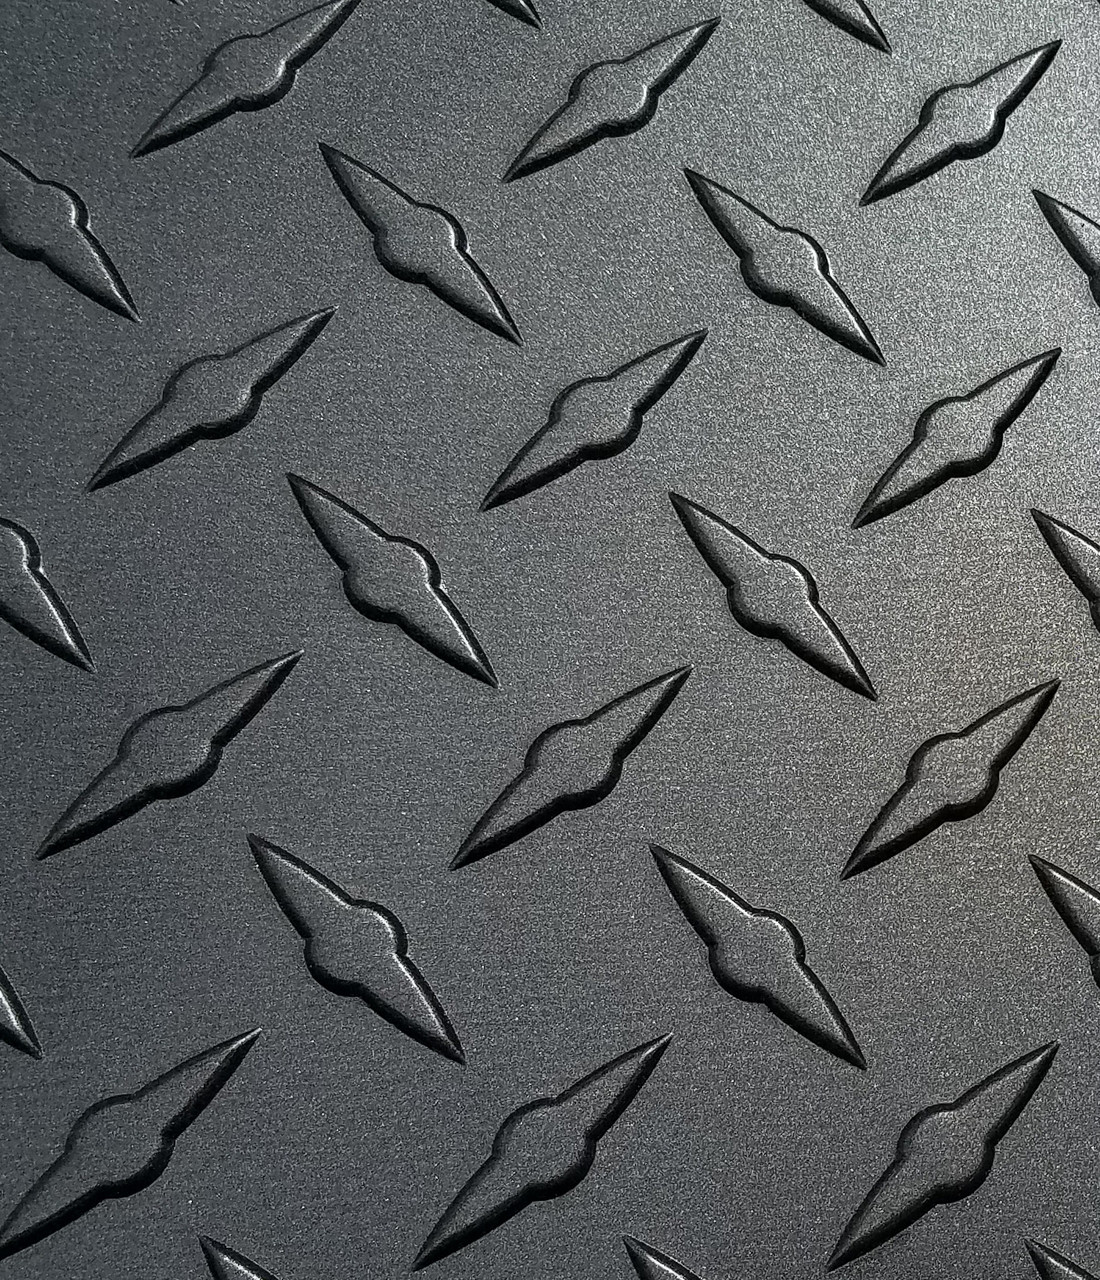 Gunmetal Gray Diamond Plate Aluminum Sheet Cutsmetal